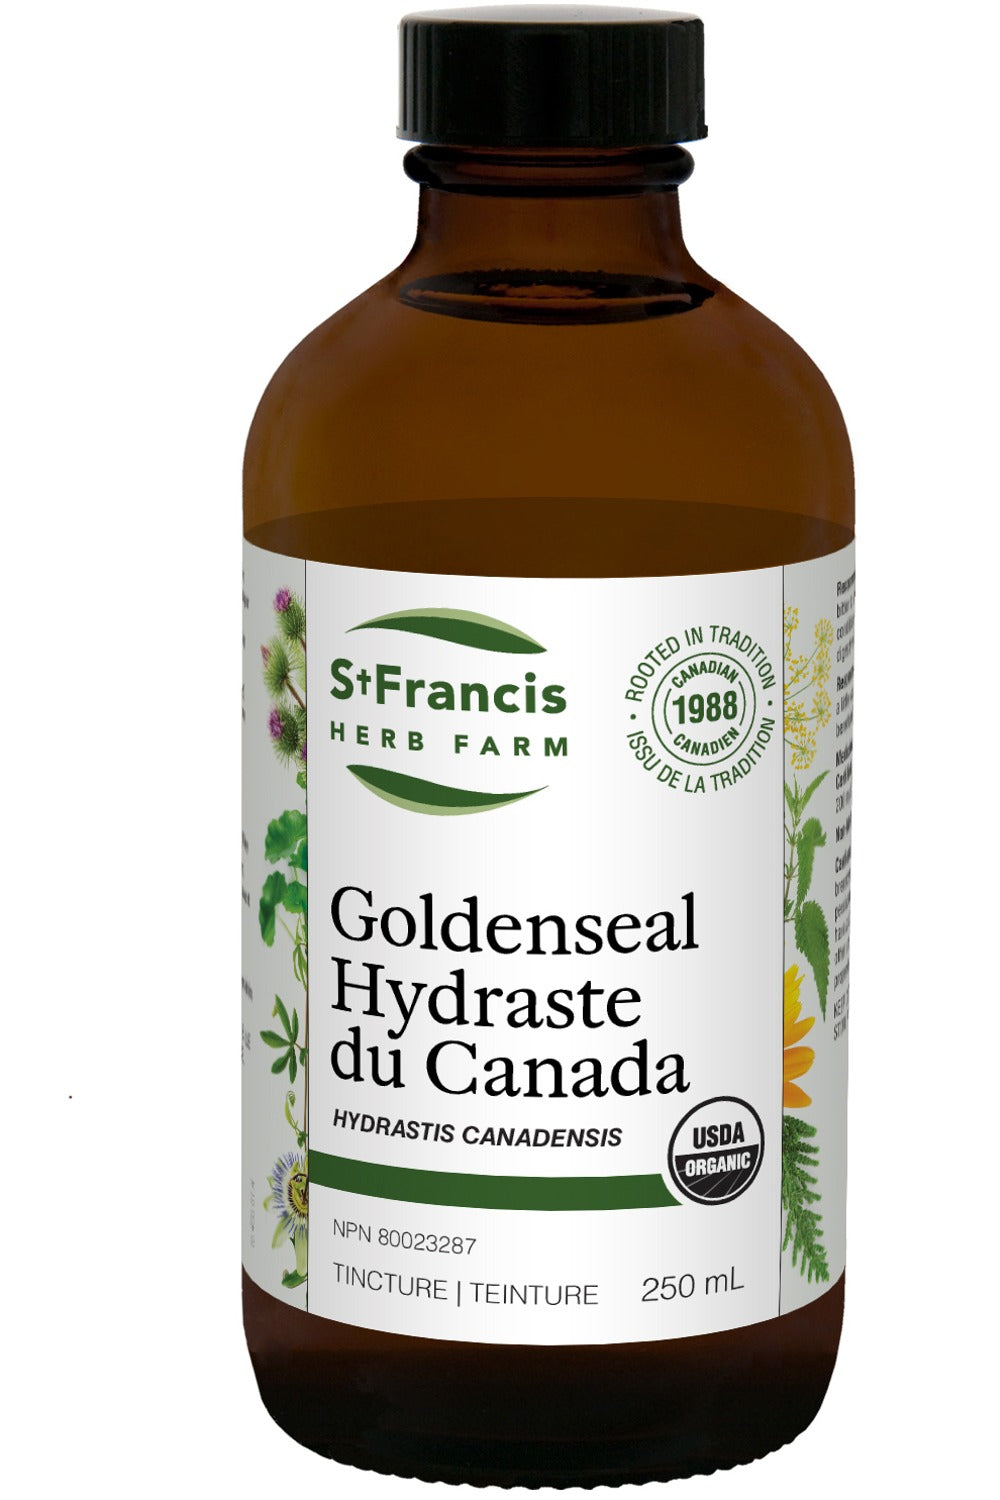 ST FRANCIS HERB FARM Goldenseal (250 ml)